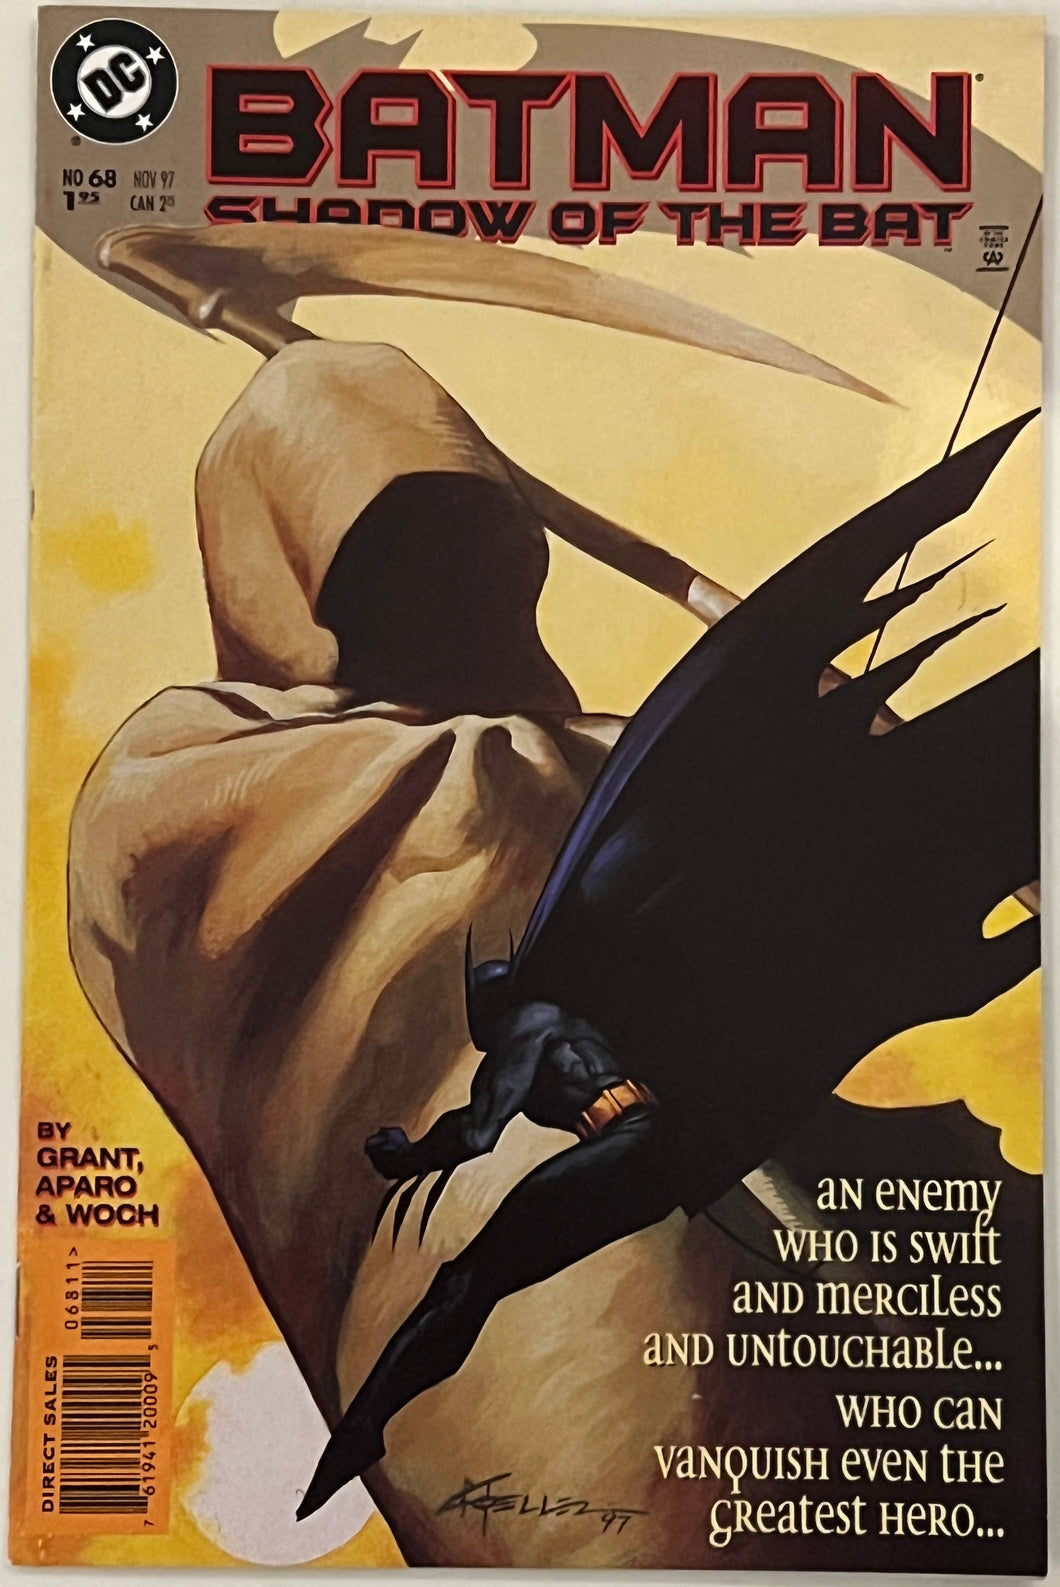 Batman Shadow of the Bat #68 (1997)